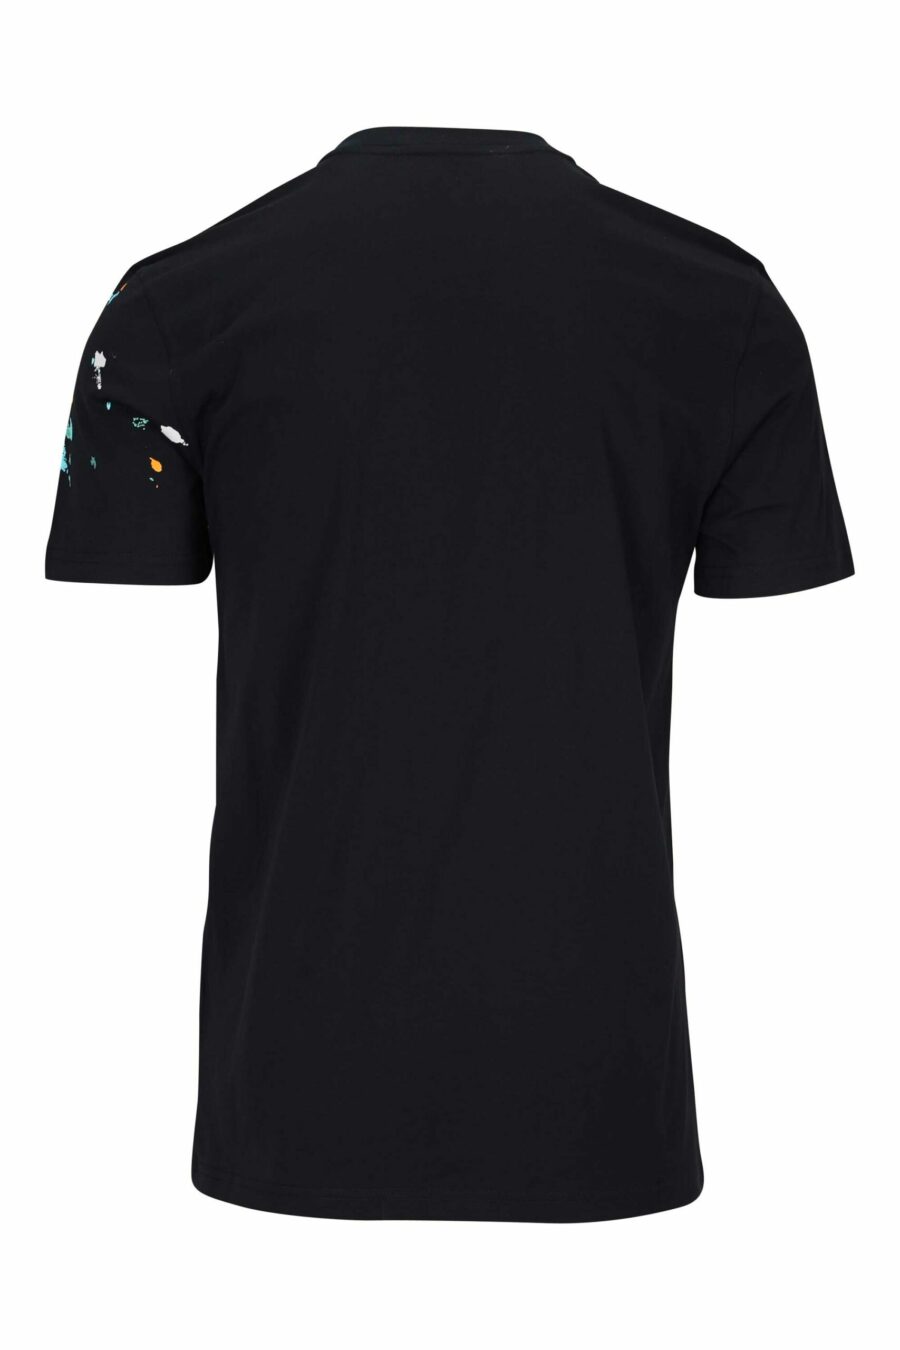 T-shirt preta com maxilogo "couture milano" com "splash" multicolorido - 667113391946 1 scaled